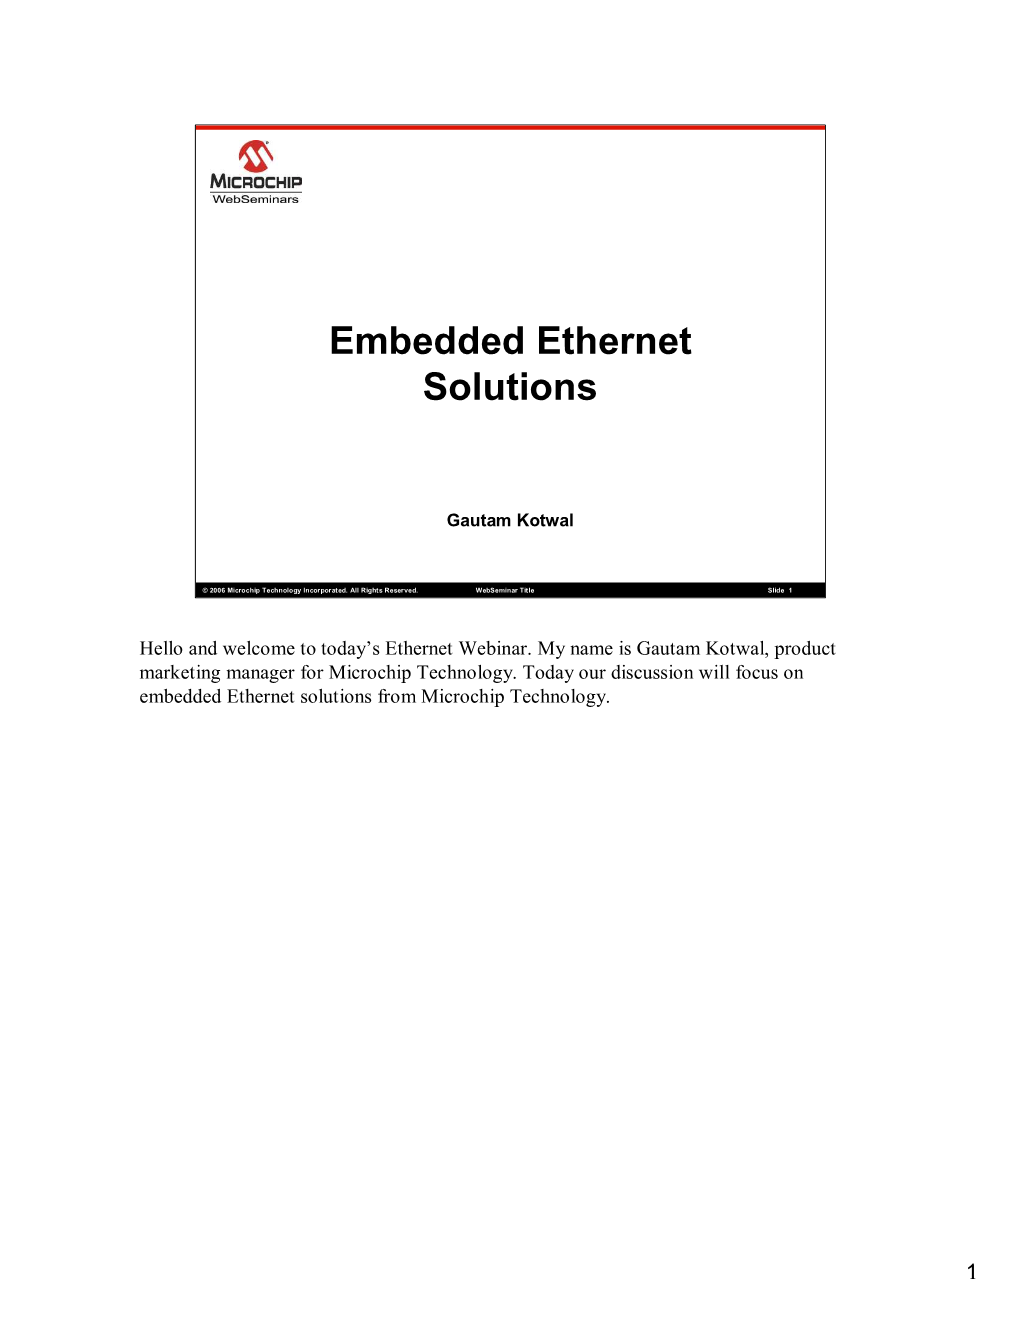 Embedded Ethernet Solutions